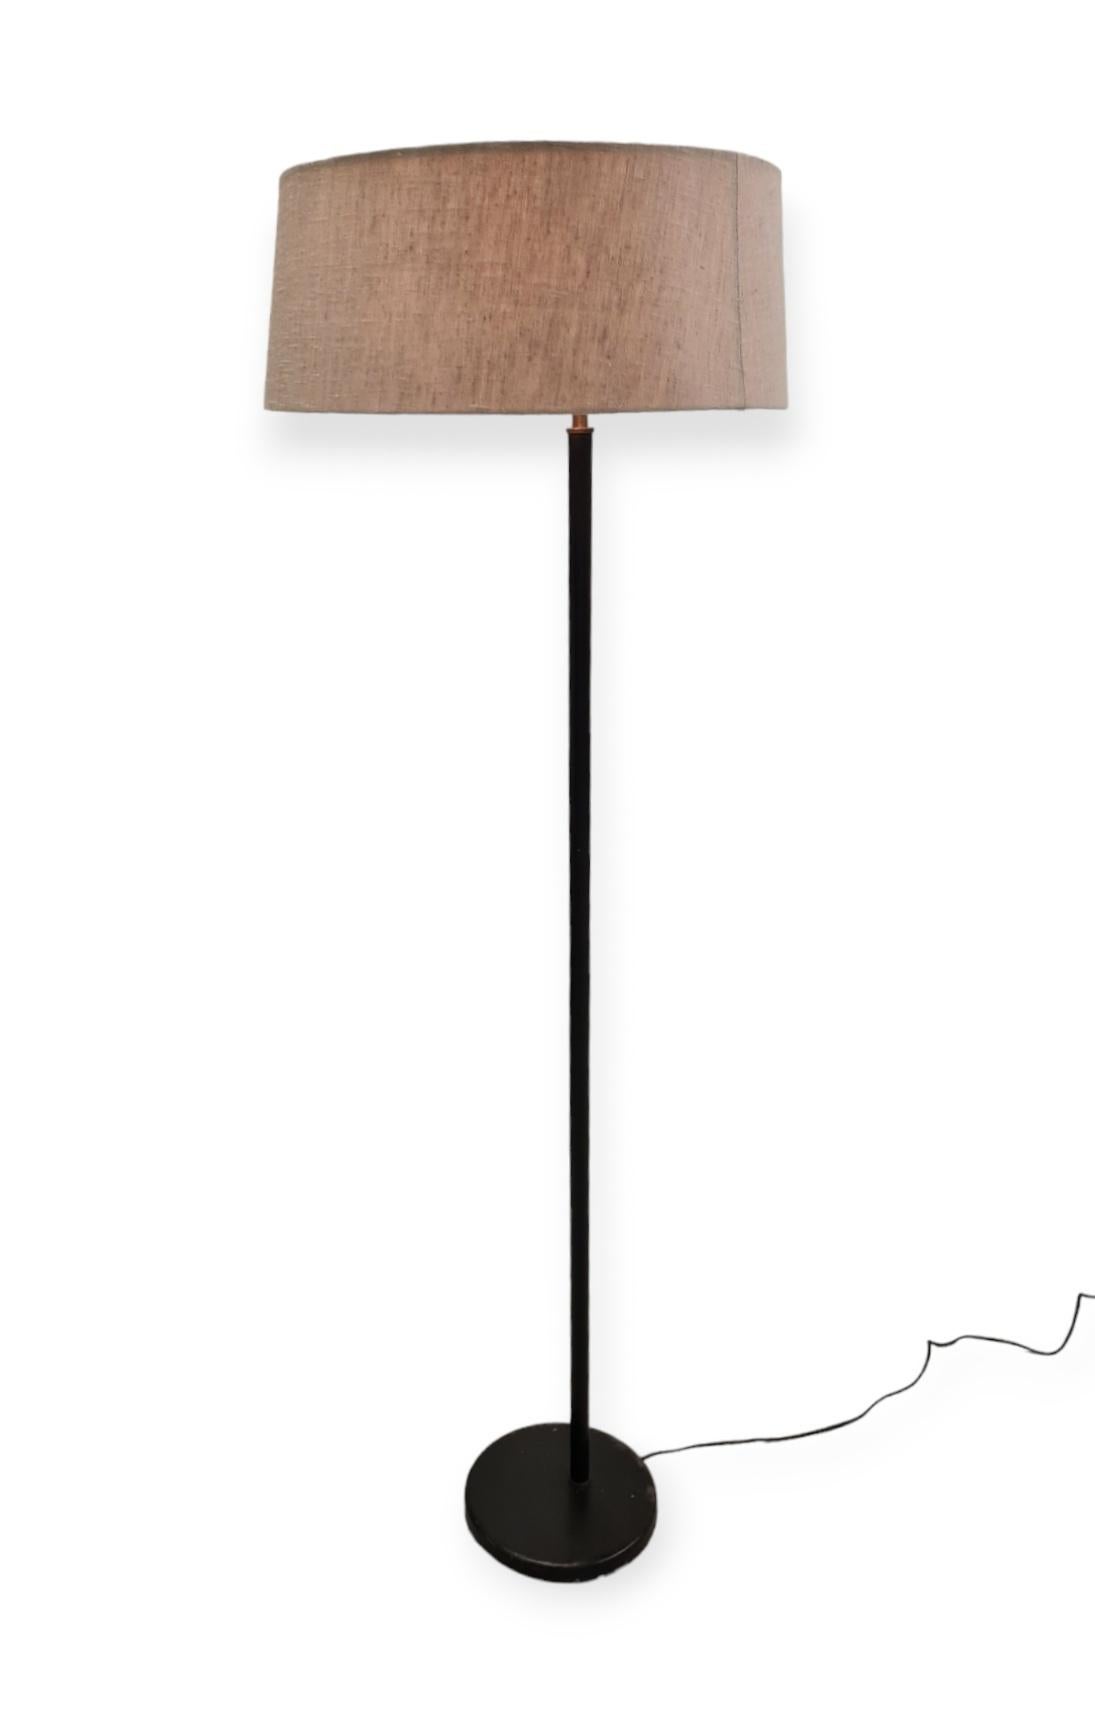 Maija Heikinheimo Floor Lamp MH801, Valaistustyö for Artek 1950s For Sale 5